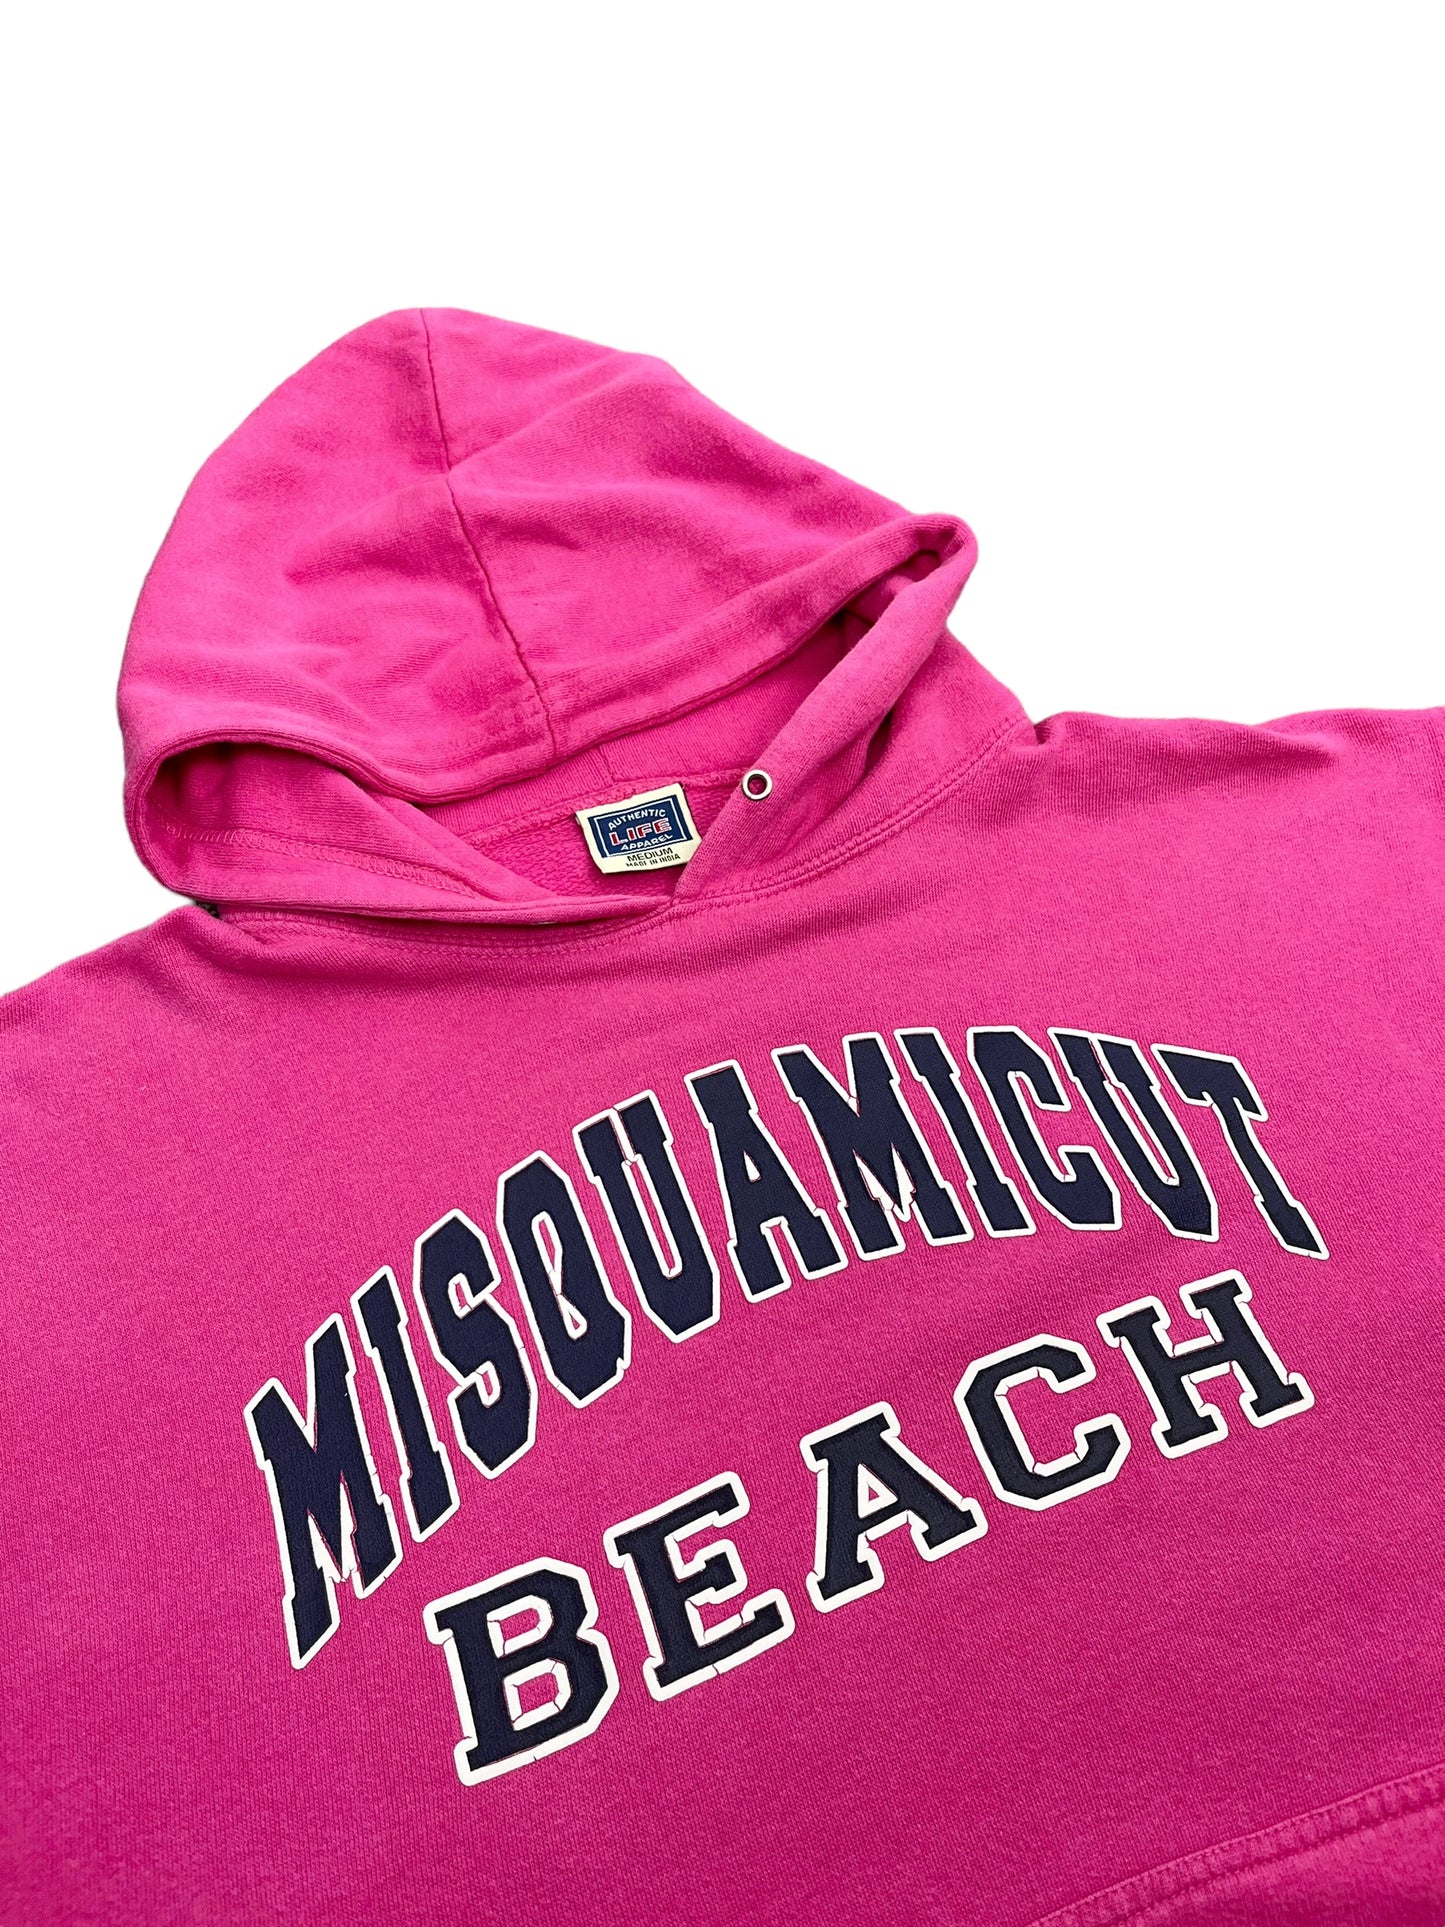 Women’s Vintage 90’s Misquamicut Beach Hooded Sweatshirt - Medium